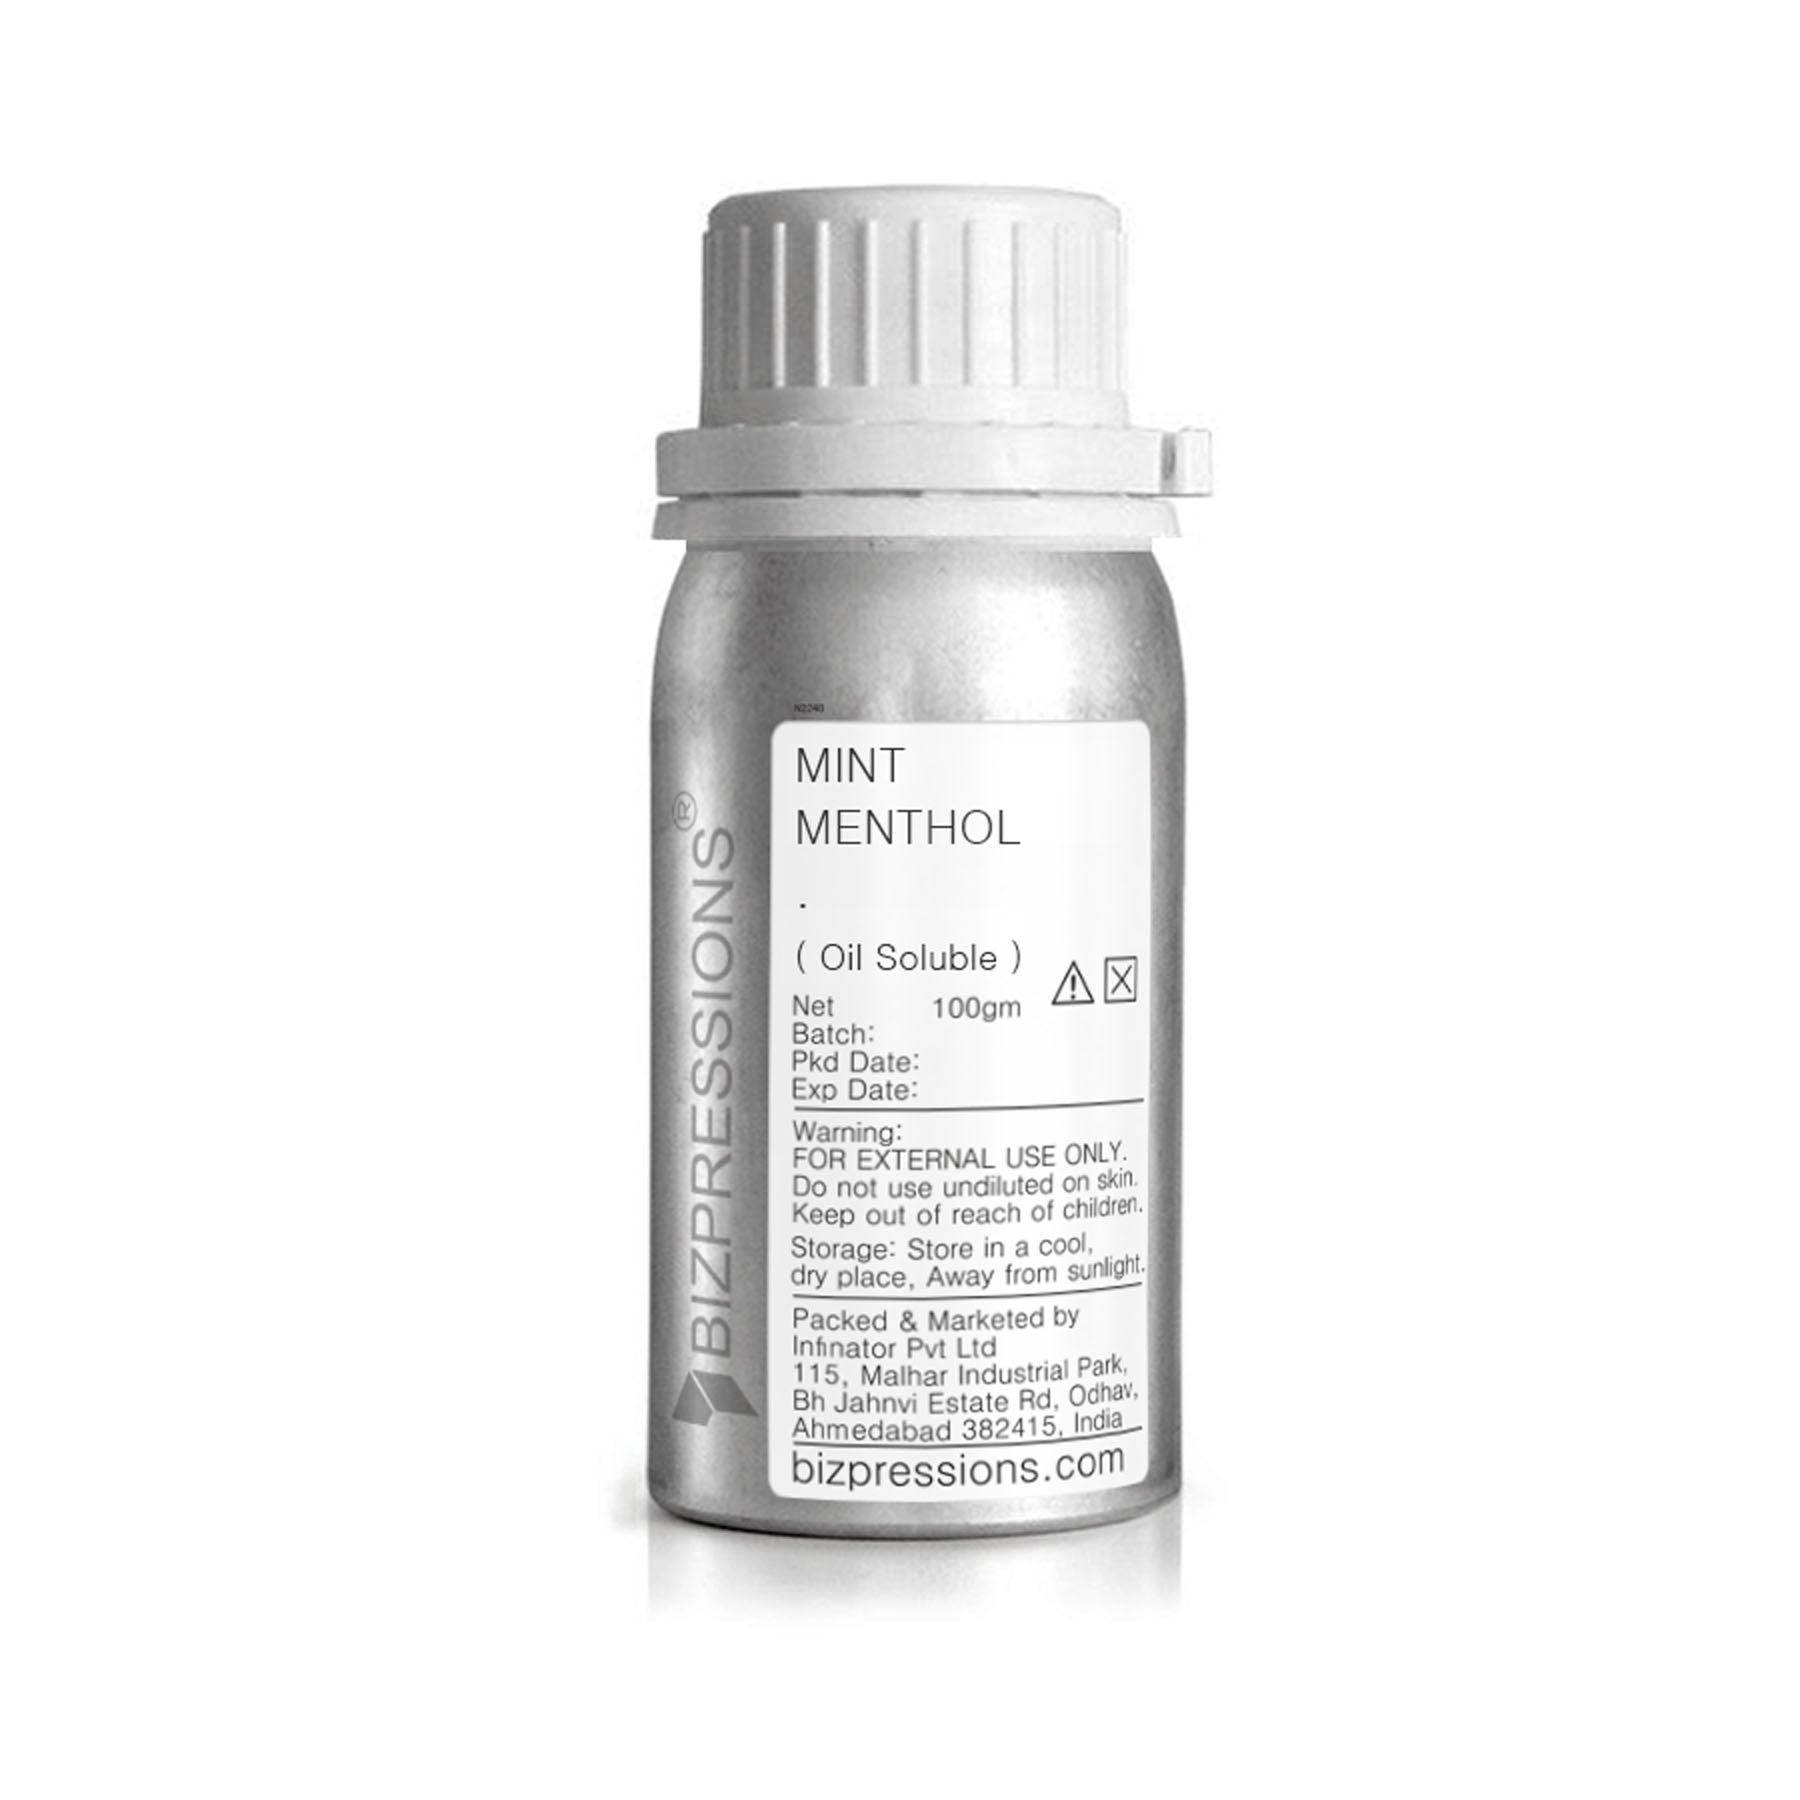 MINT MENTHOL - Fragrance ( Oil Soluble ) - 100 gm